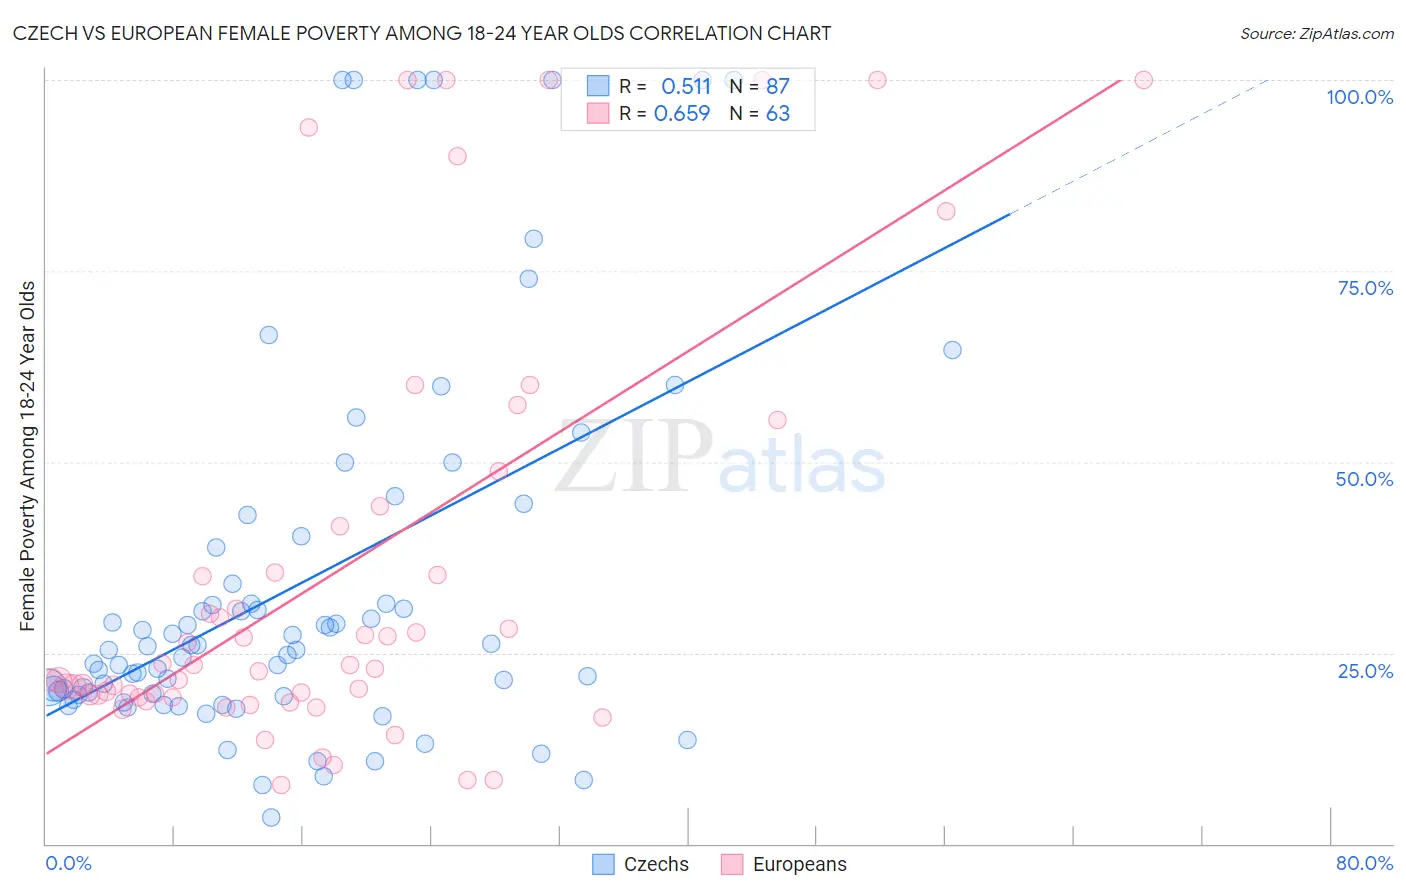 Czech vs European Female Poverty Among 18-24 Year Olds